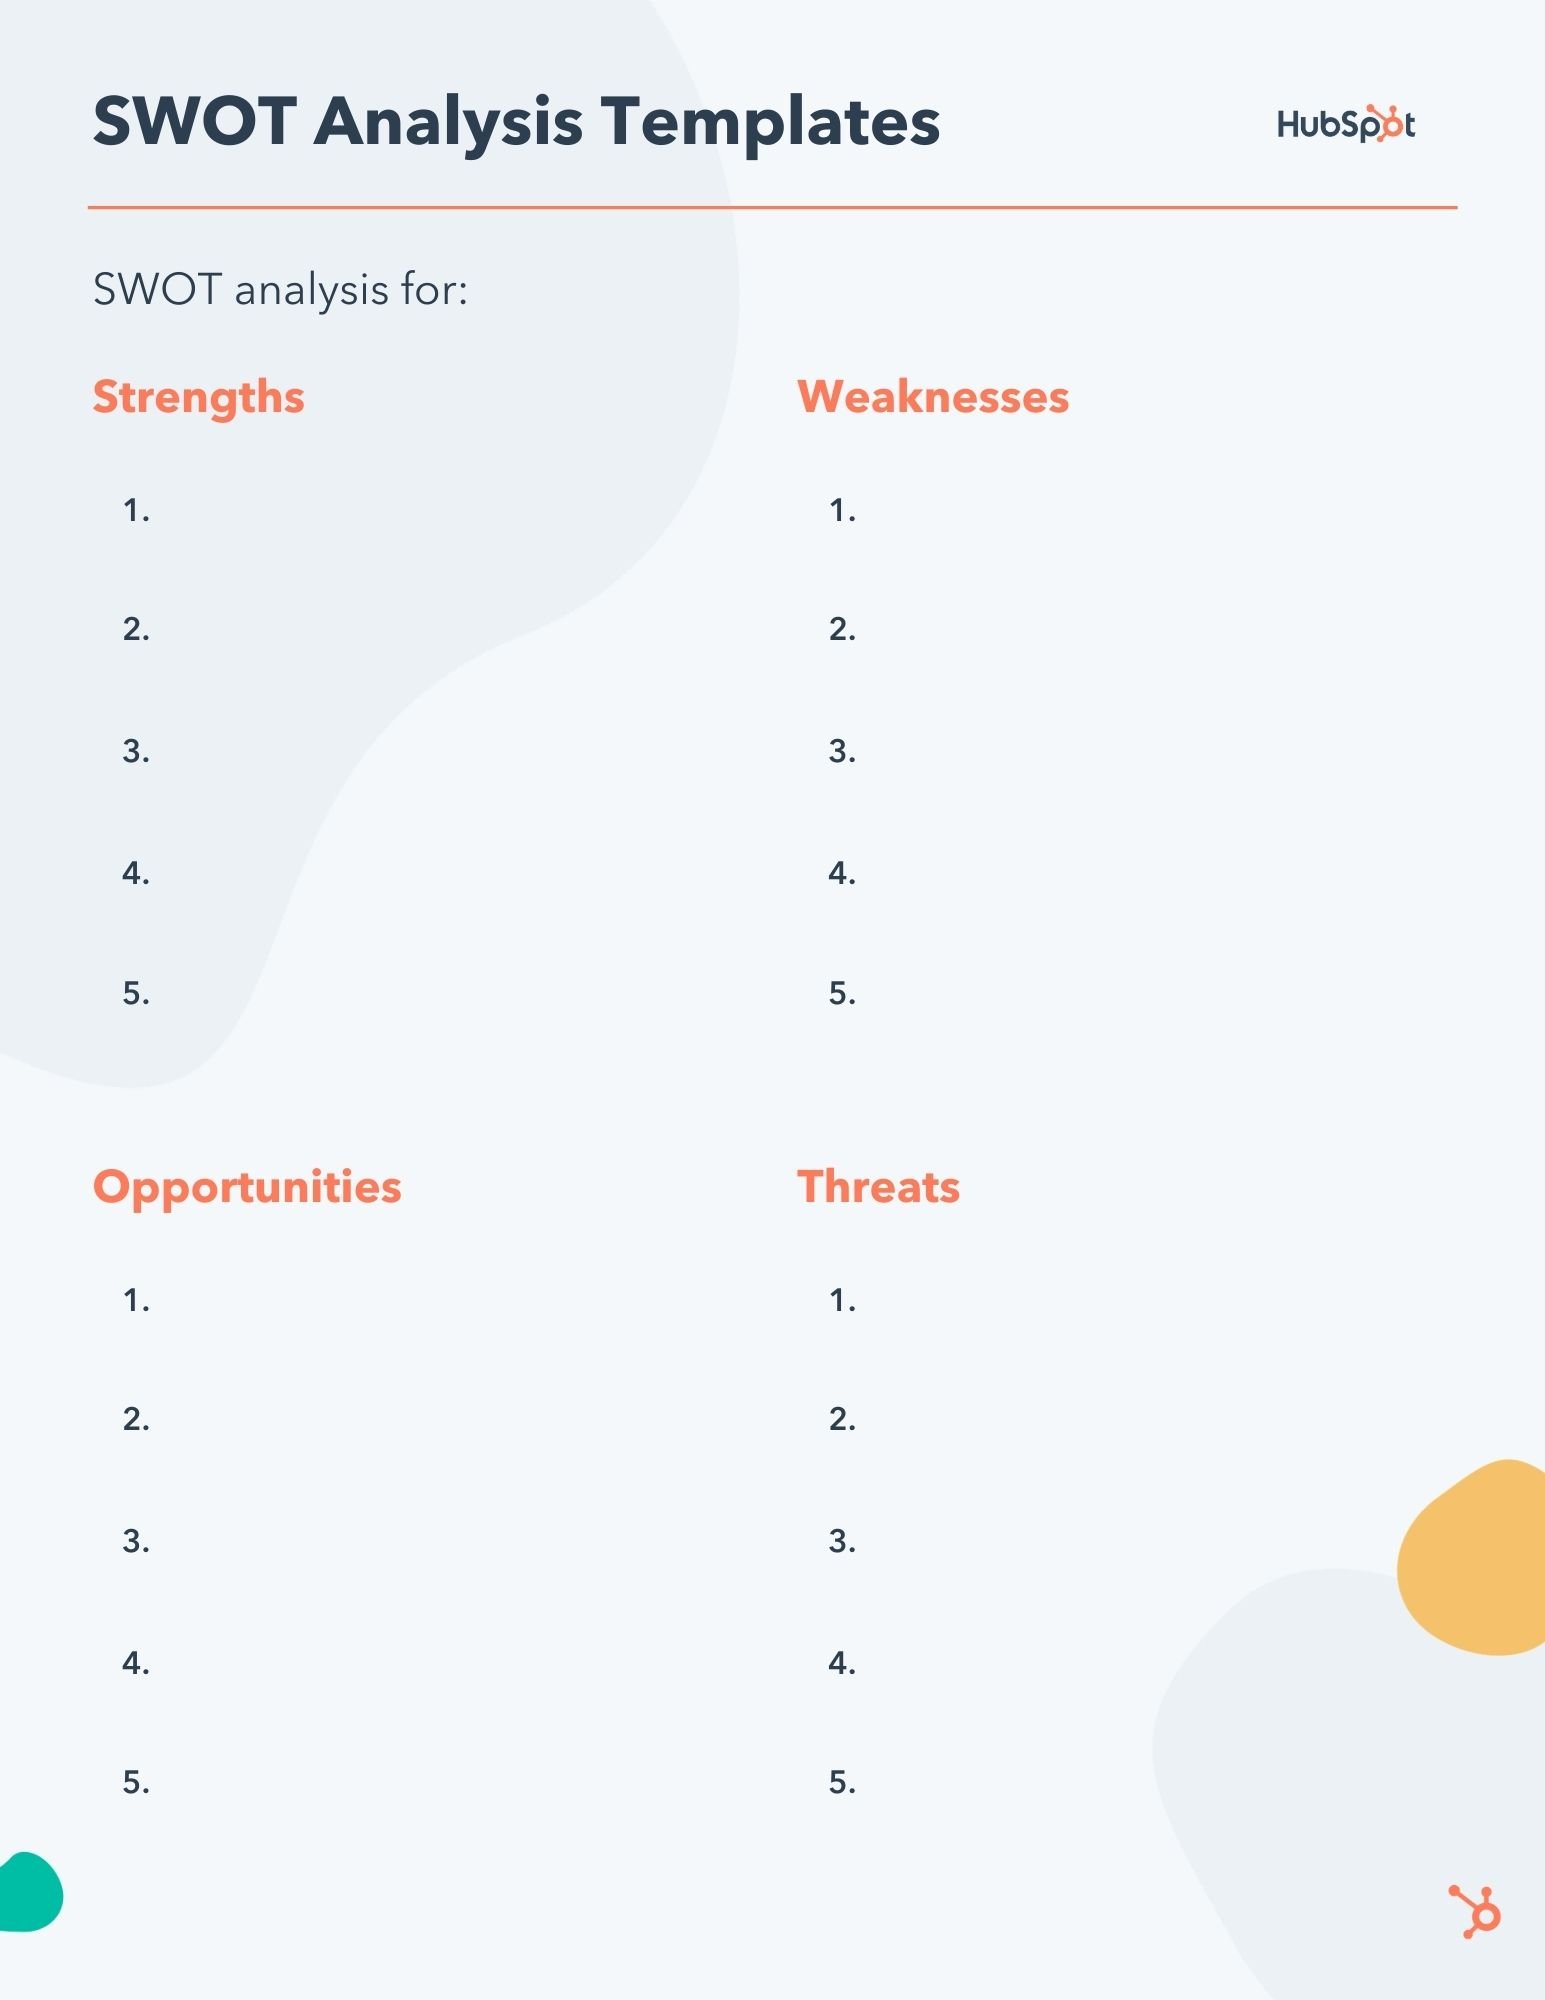 SWOT Analysis Template, Blog Image